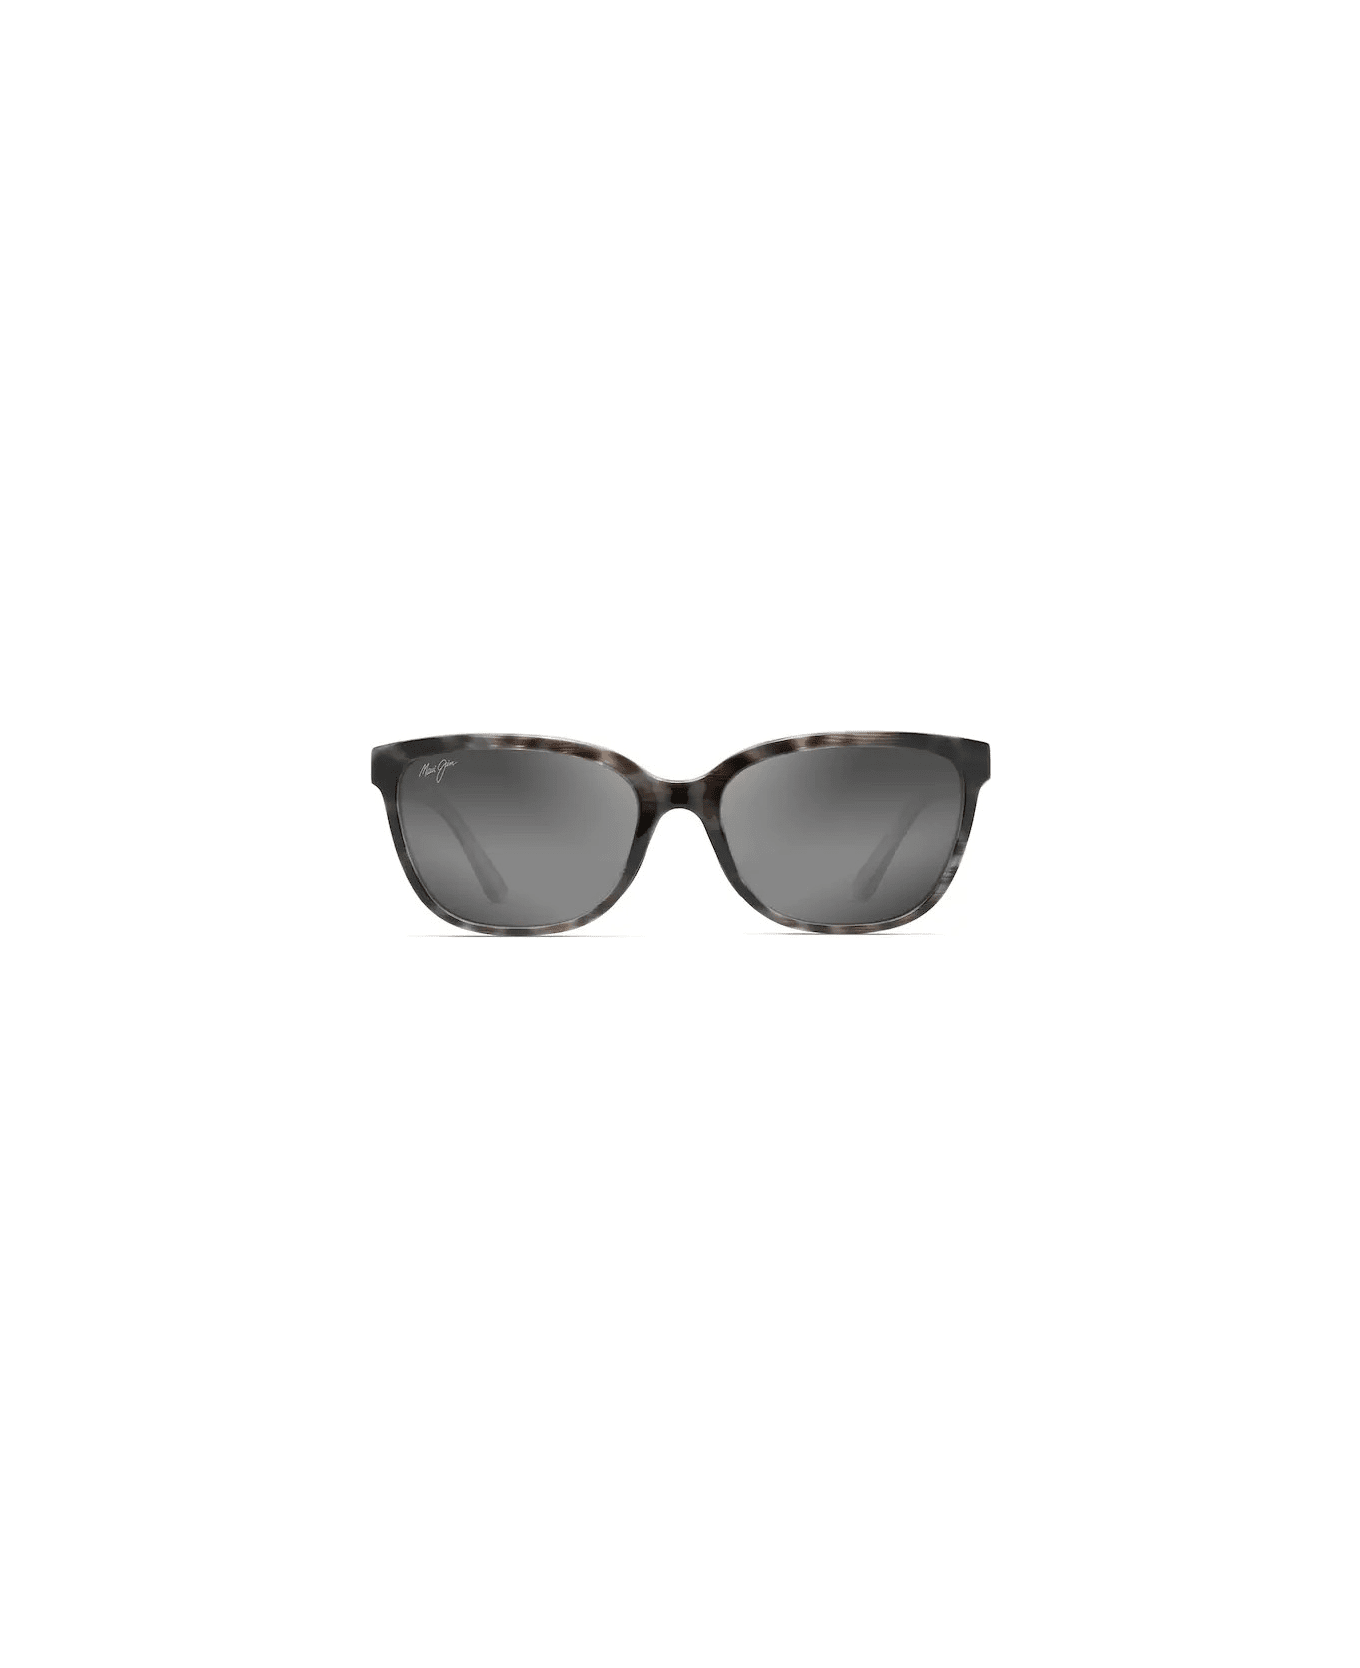 Maui Jim MJ758 11S Sunglasses - Tartarugato grigio